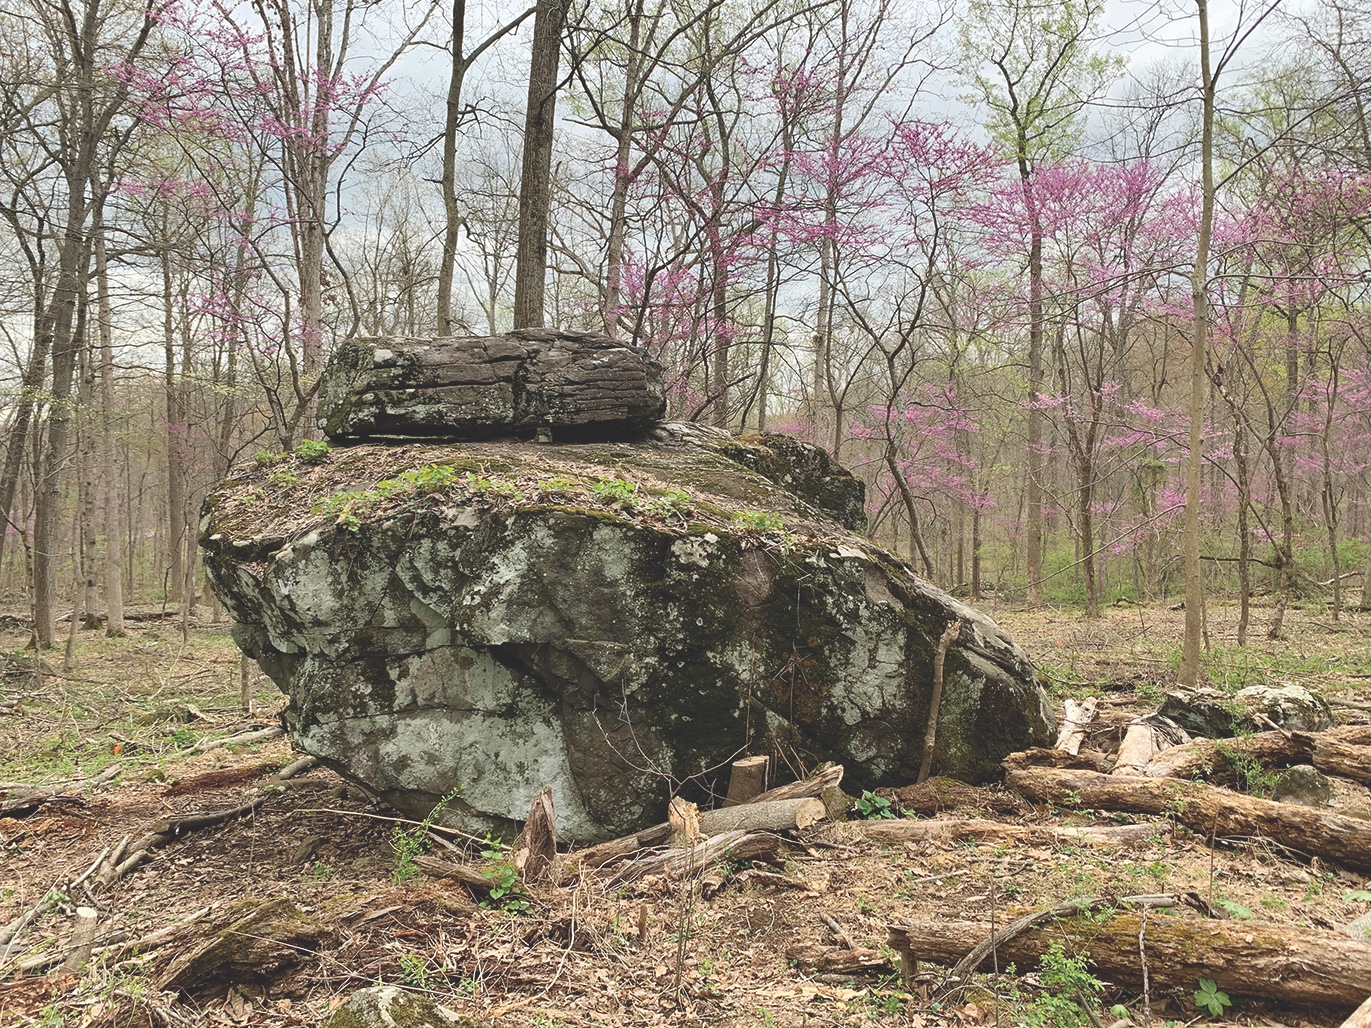 Landmark Forbes Rock, left, was cloaked in thick vegetation until the landscape restoration. (Photo by Melissa A. Winn)